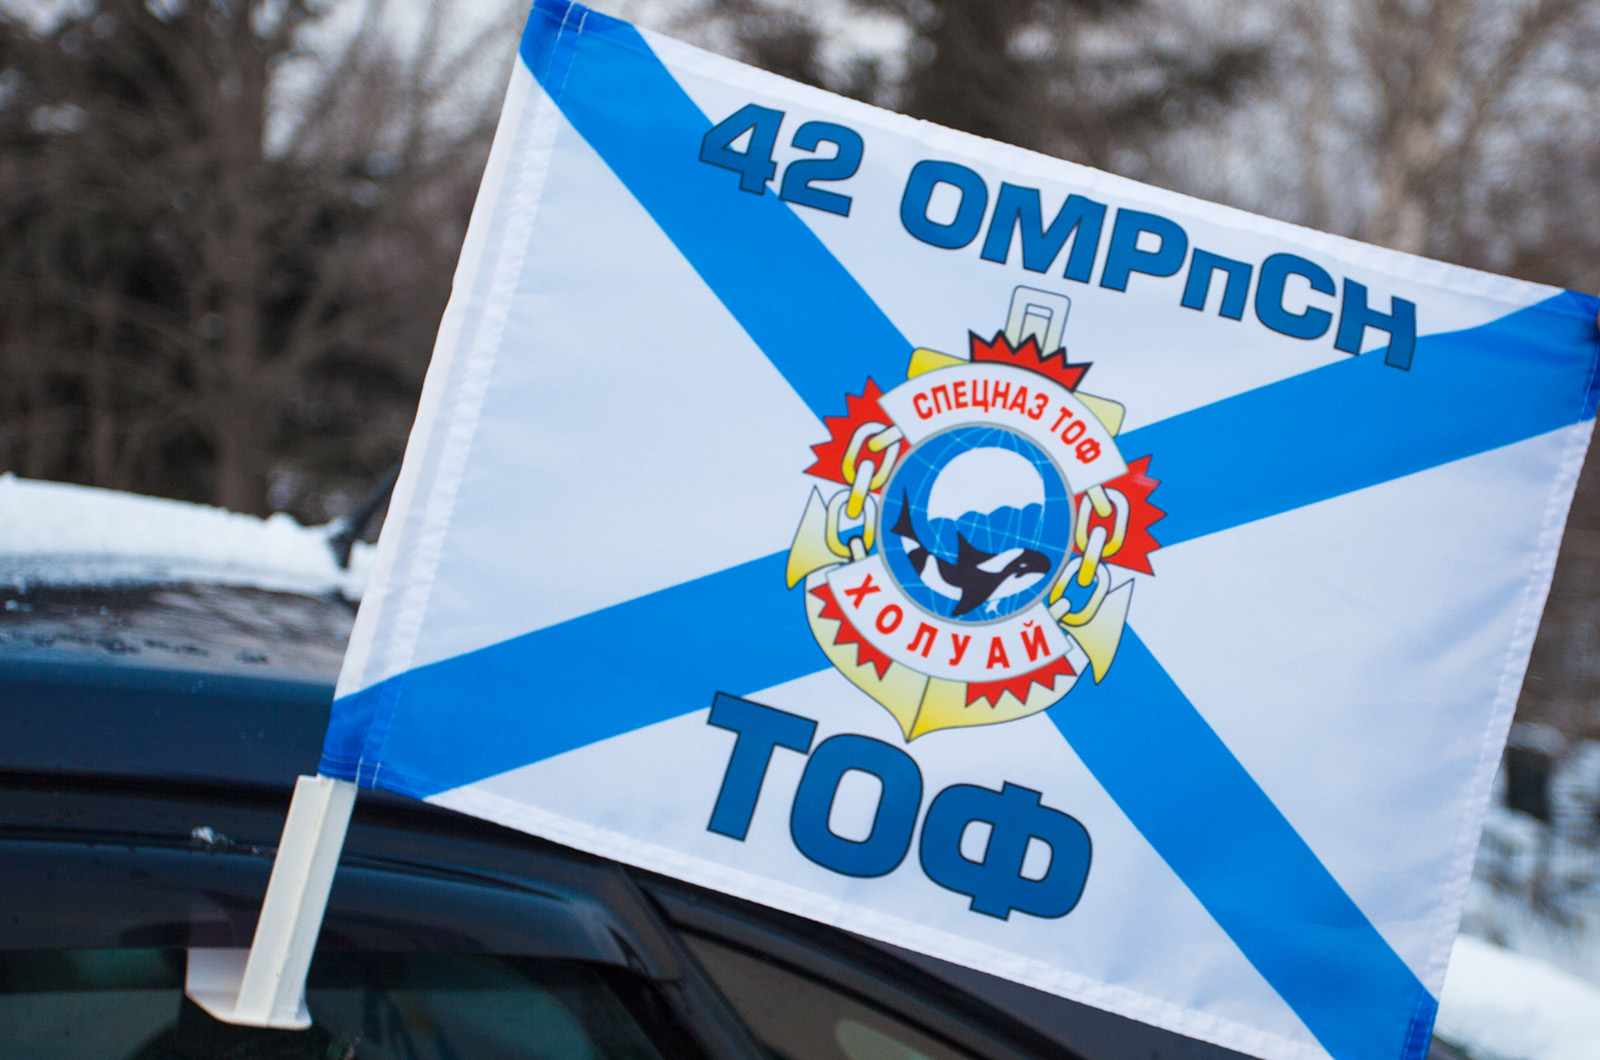 Автомобильный флаг 42 ОМРпСН 